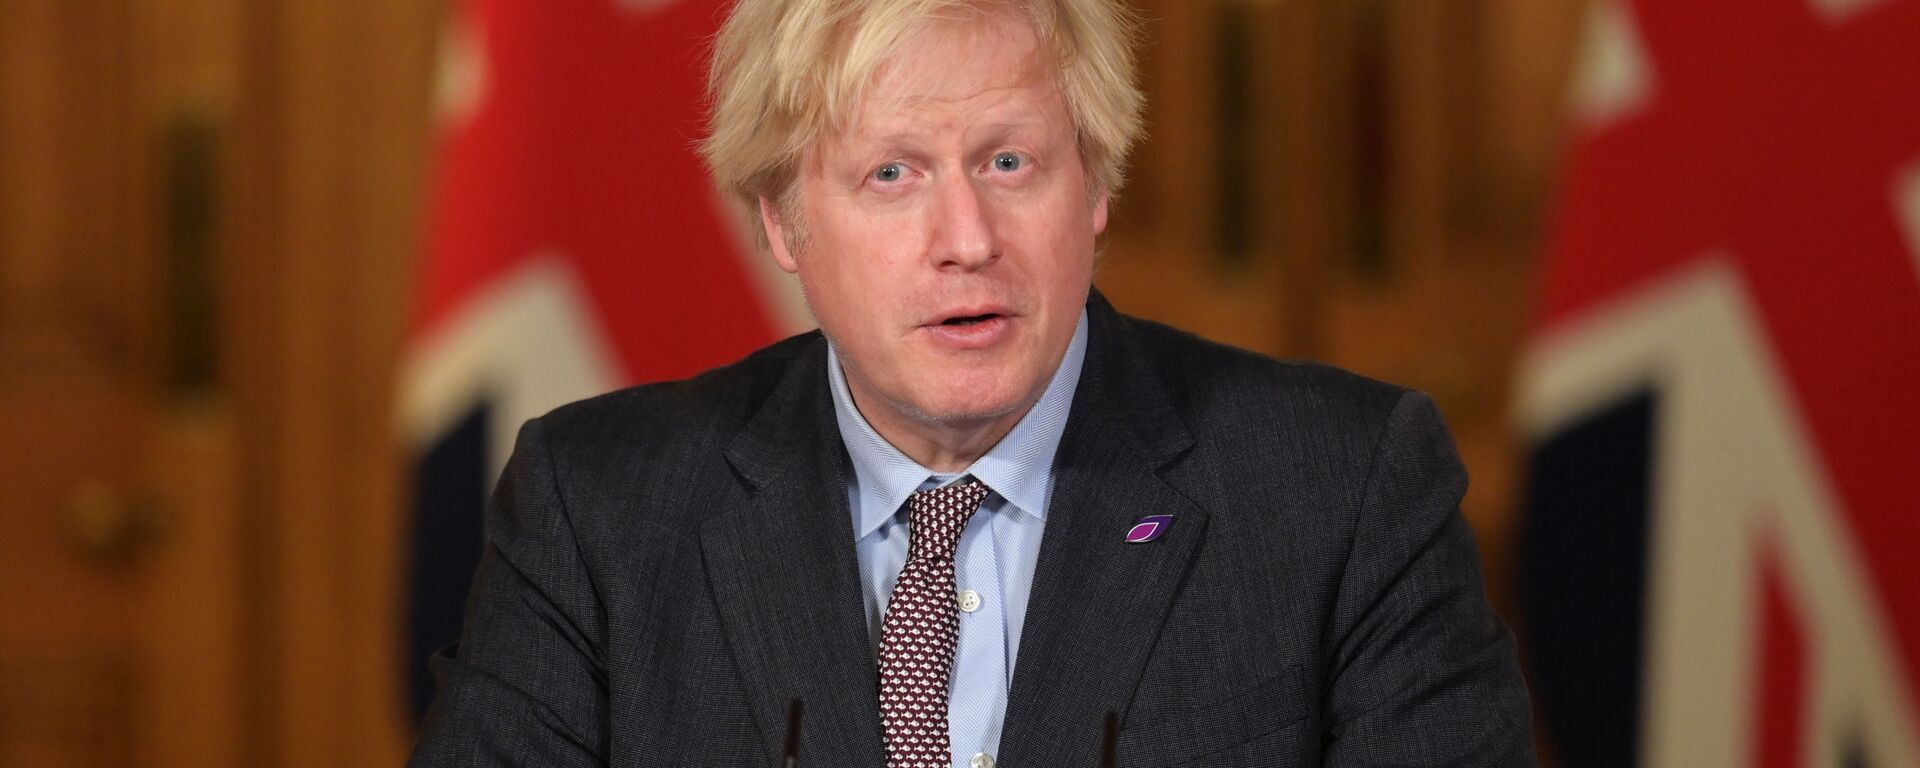 Boris Johnson, primer ministro del Reino Unido  - Sputnik Mundo, 1920, 08.11.2021